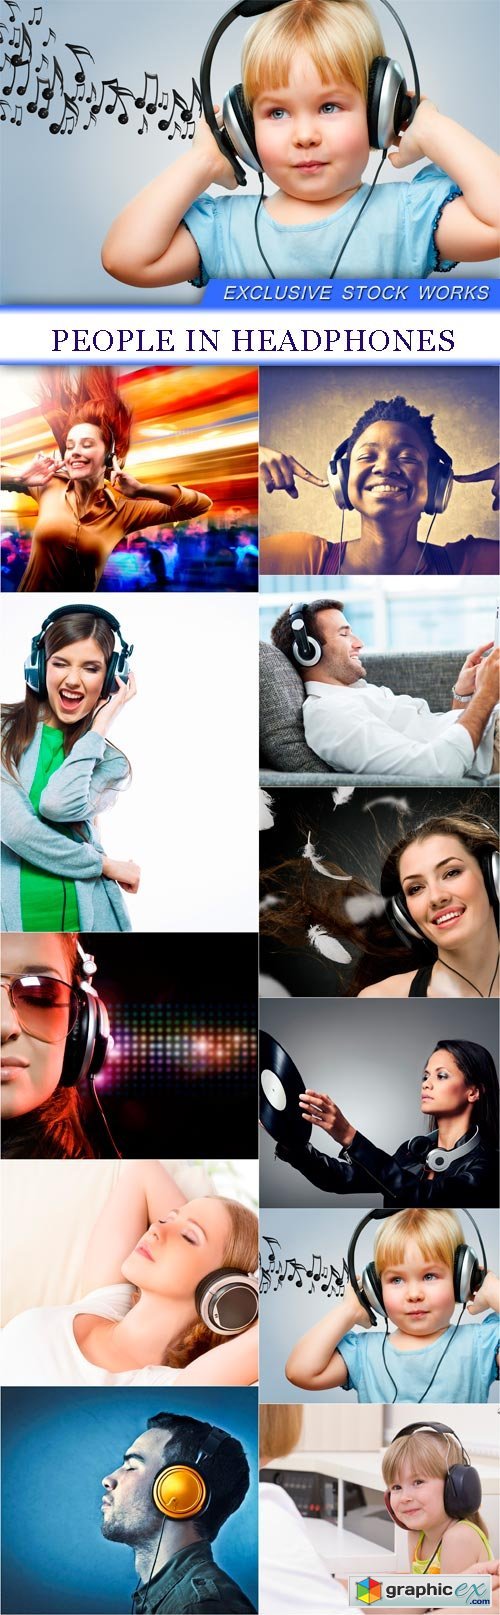 People in headphones 11X JPEG